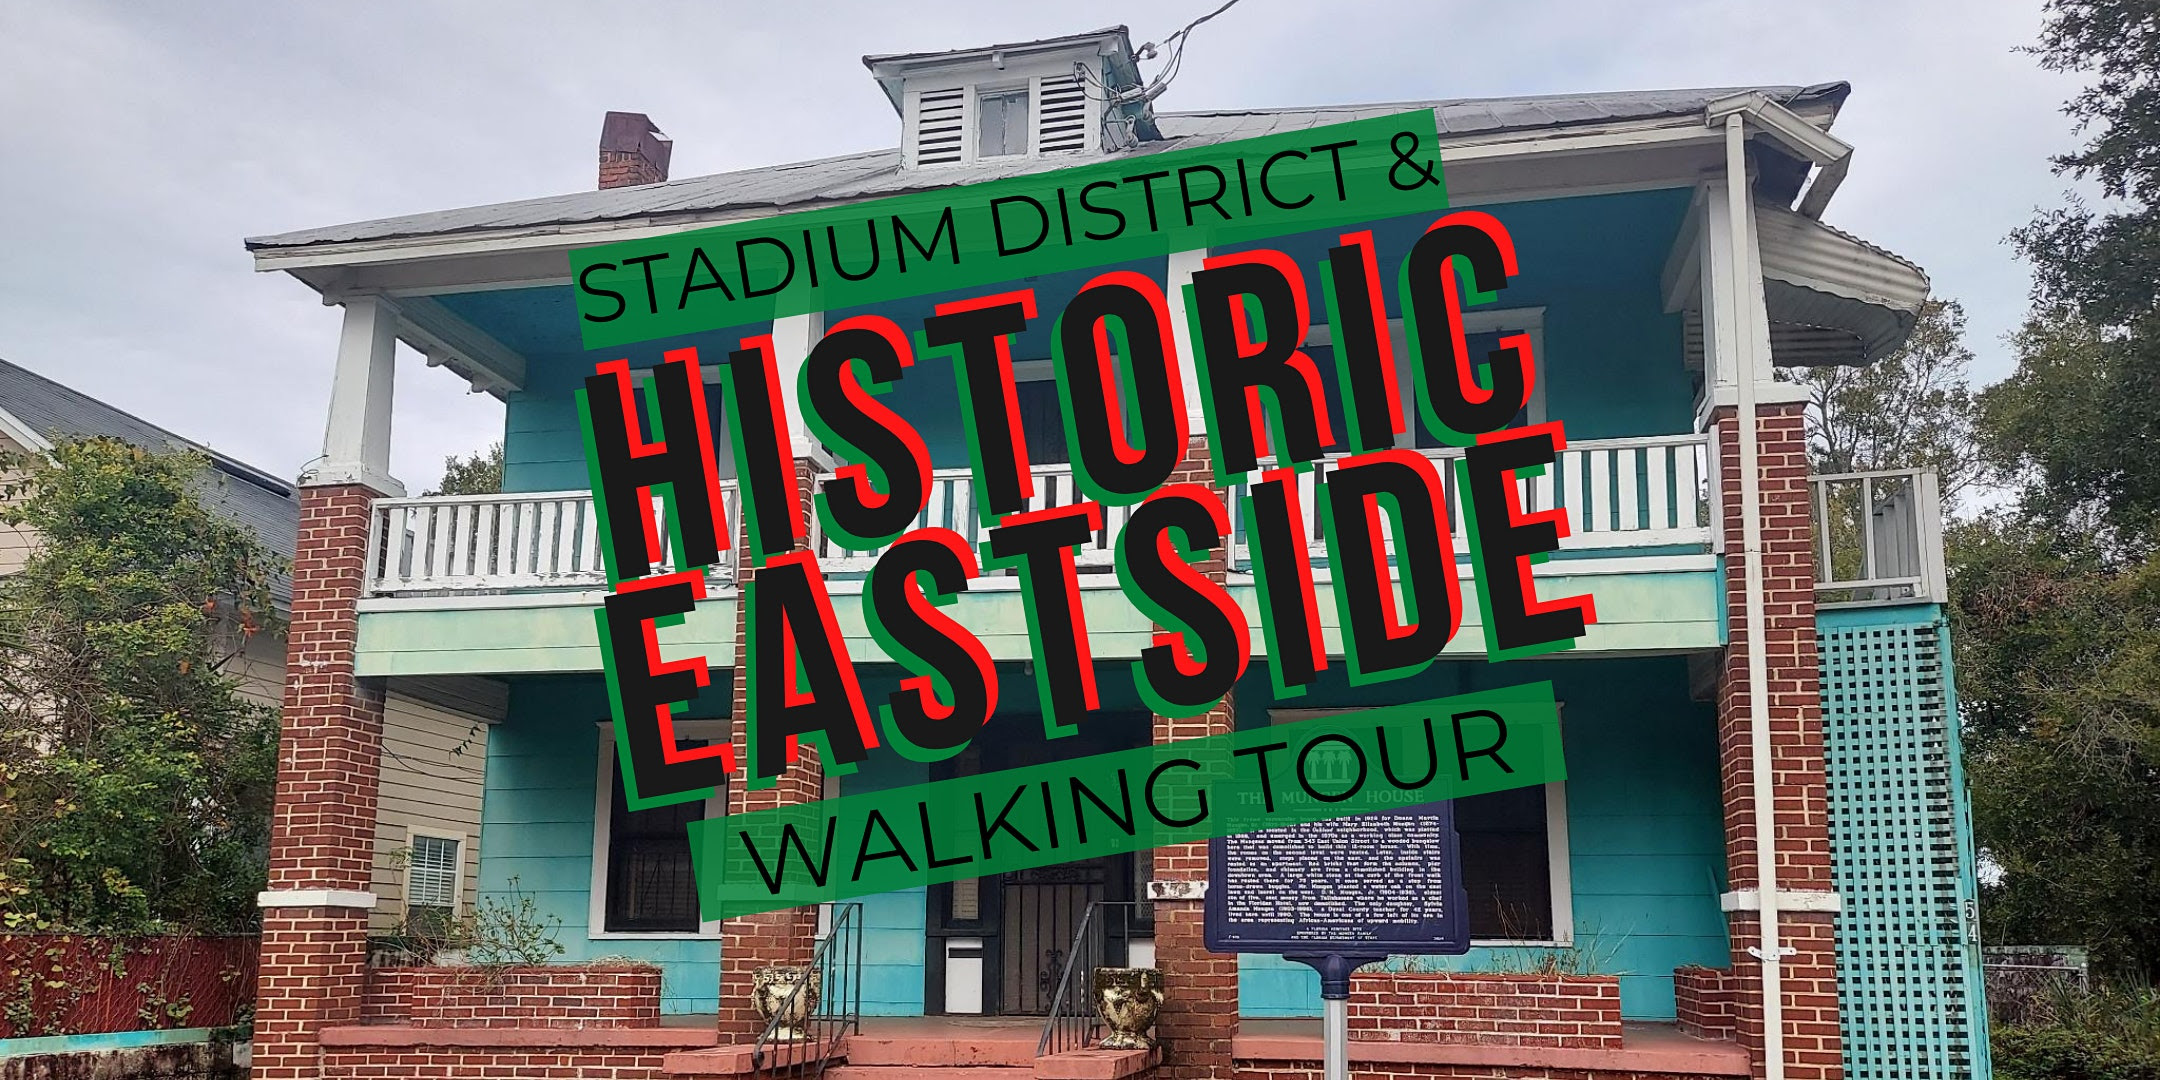 The Jaxson: Stadium District & Historic Eastside Walking Tour